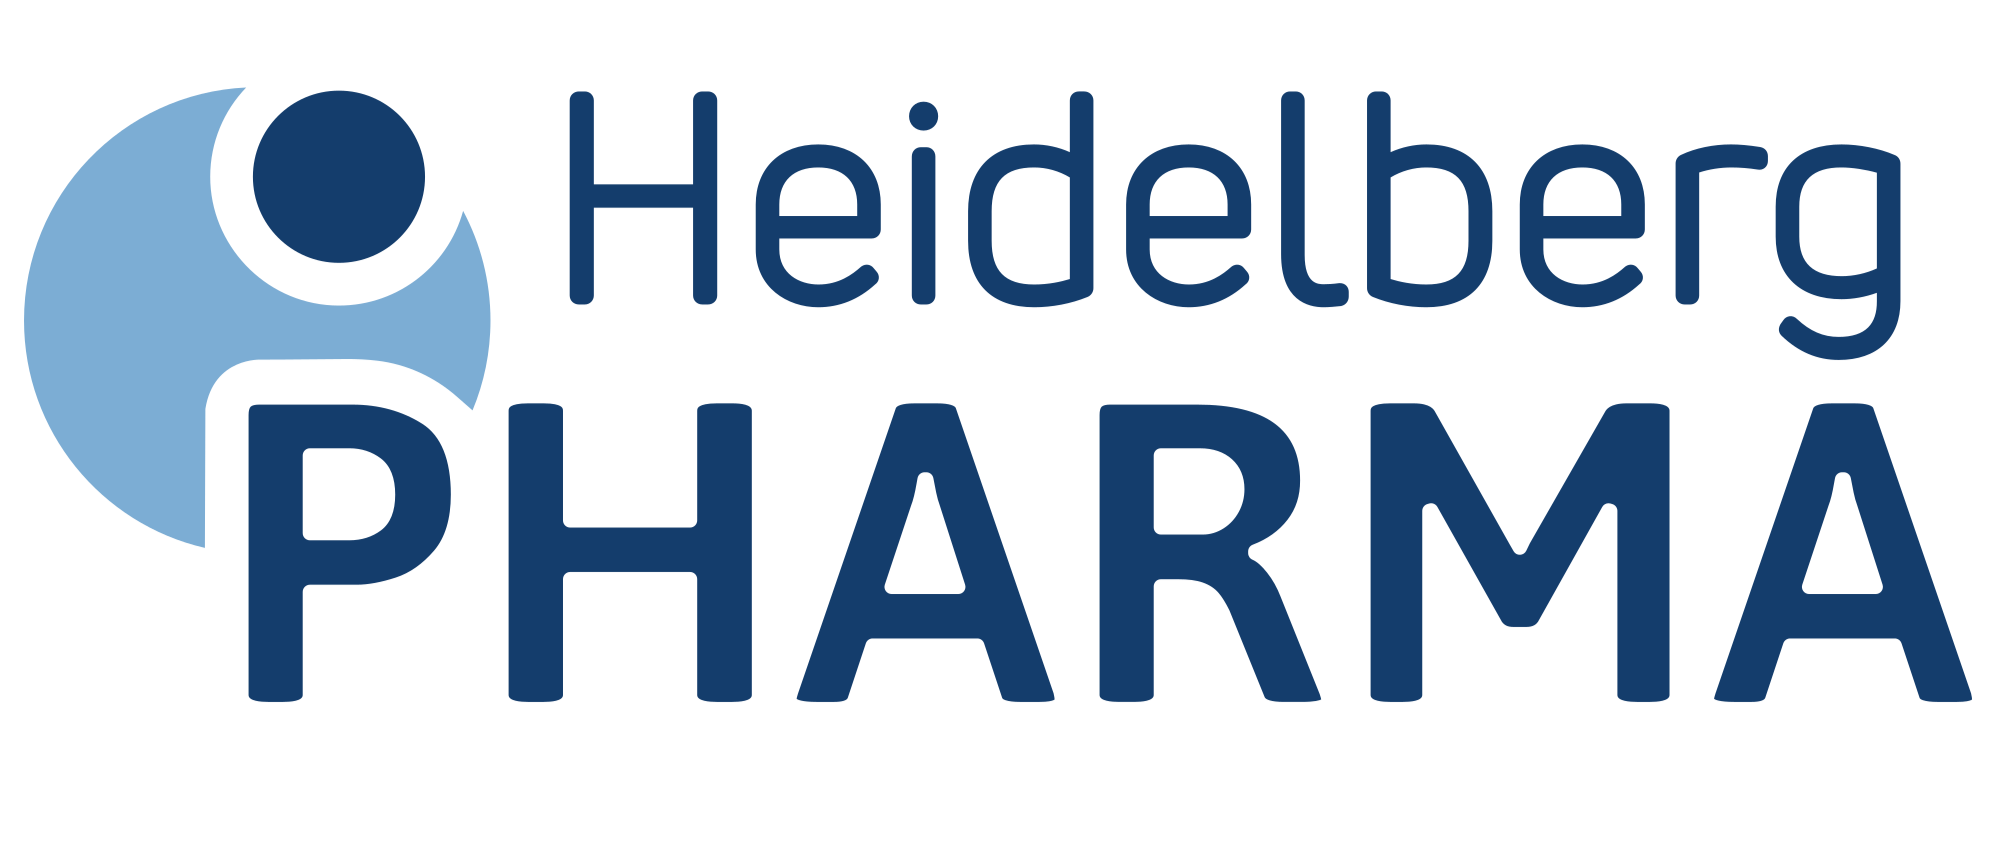 Heidelberg Pharma logo